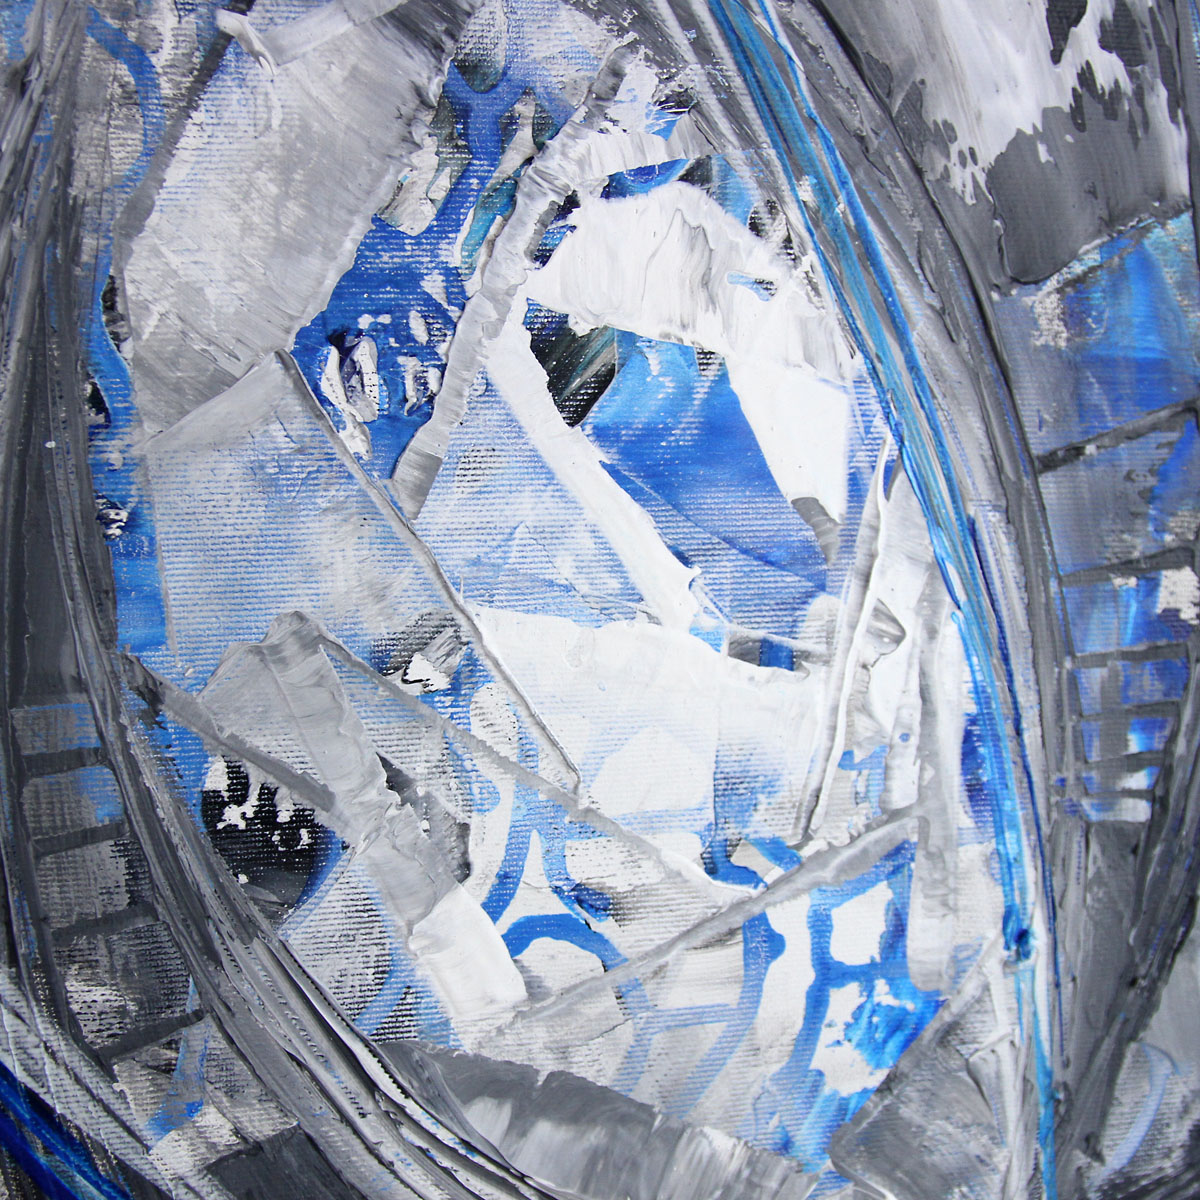 Acrylbilder, R.König: "Fragments of Liquid Ice III", Unikat/Original